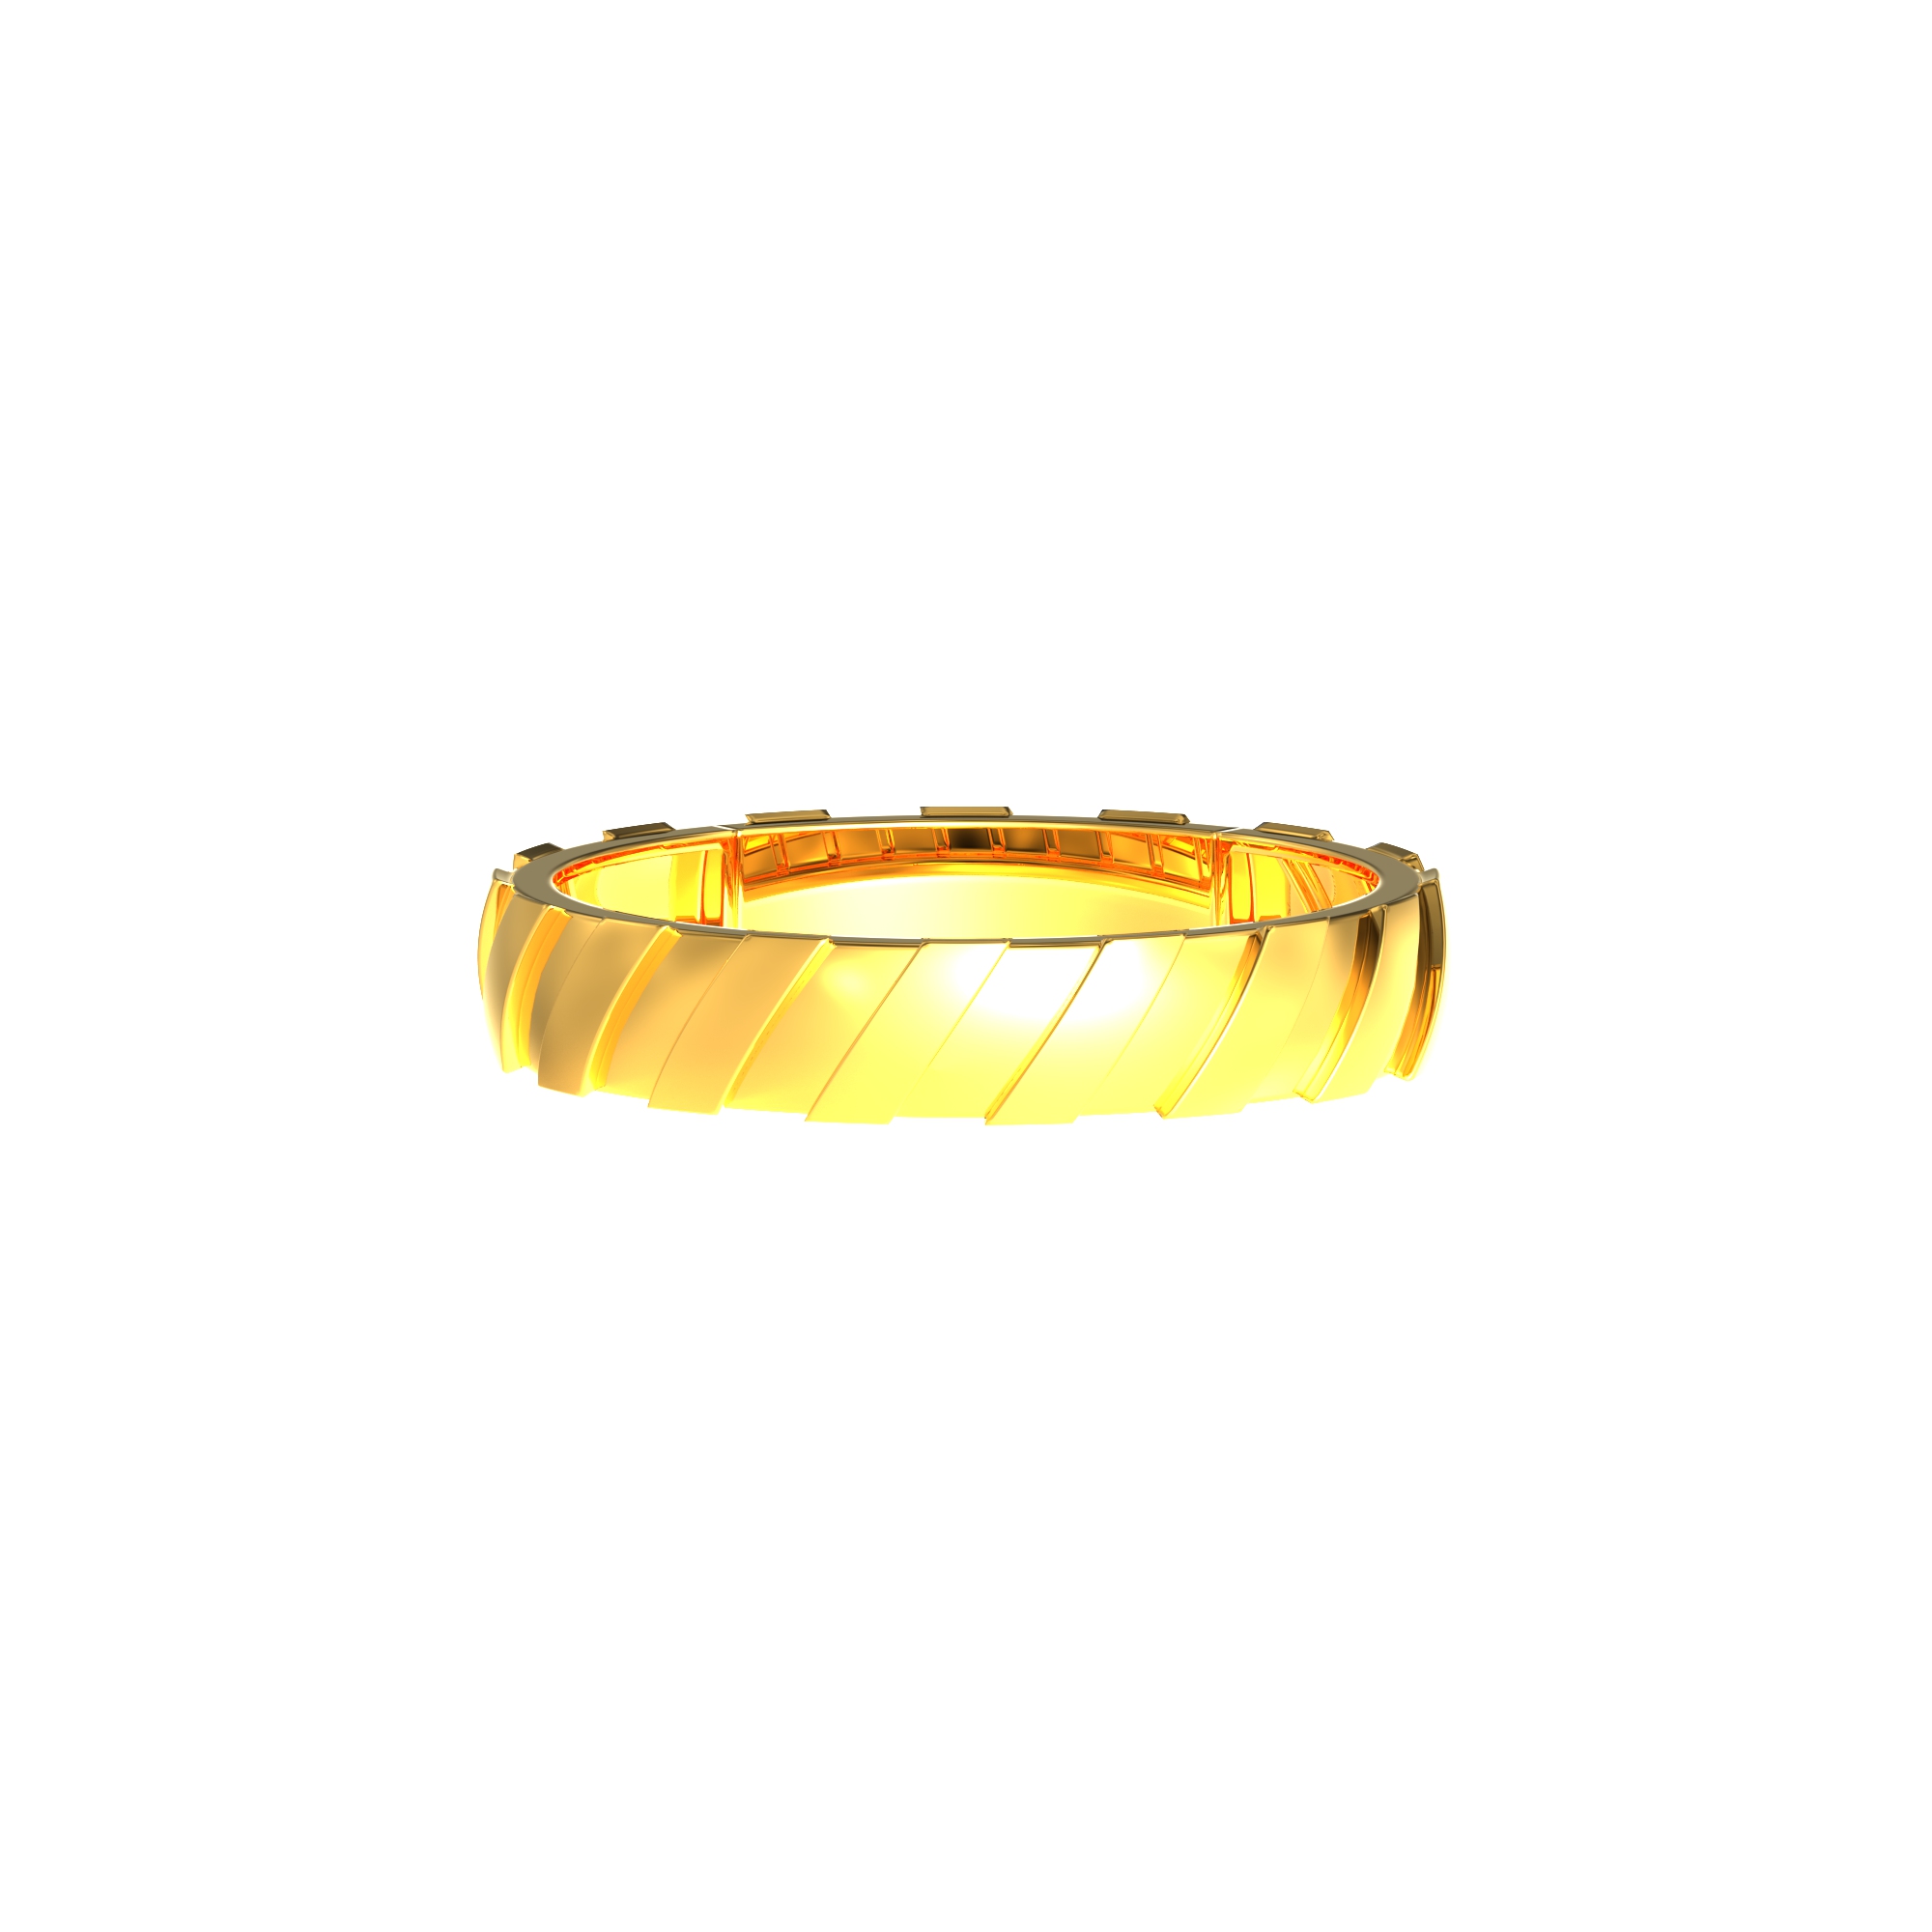 Gents Gold Ring In Strip Model-03-02